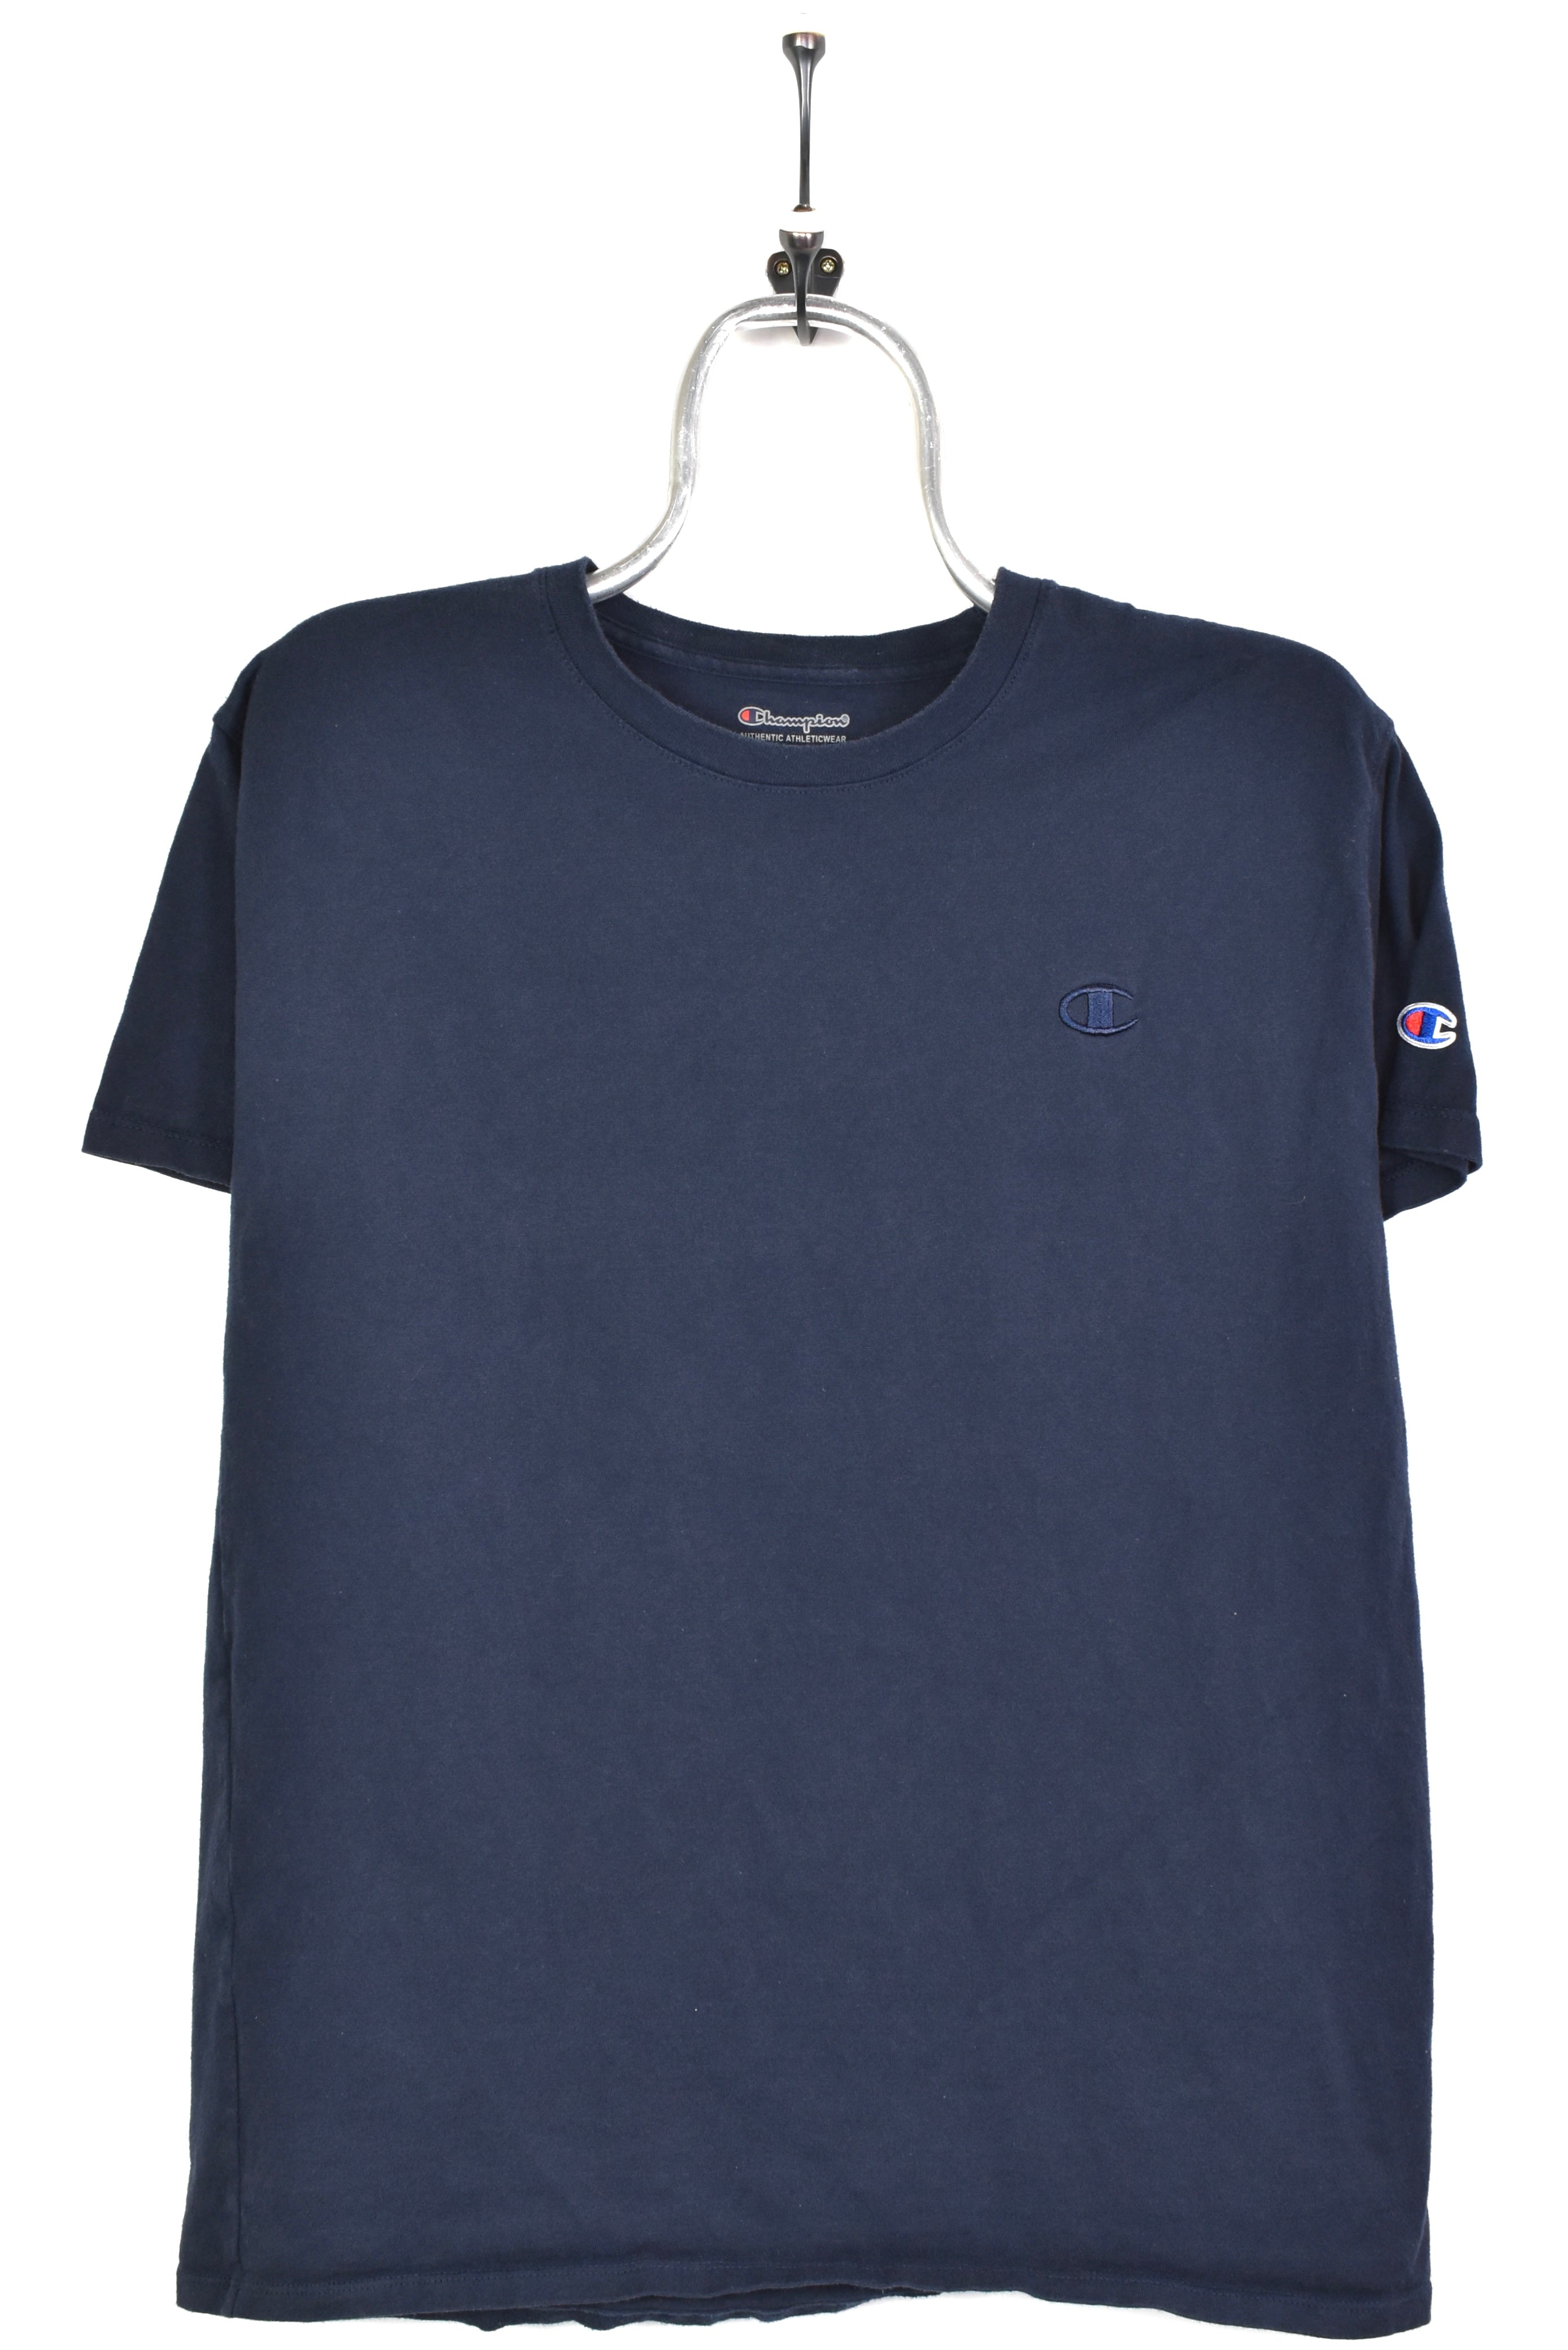 Modern Champion shirt, short sleeve embroidered tee - medium, navy blue CHAMPION